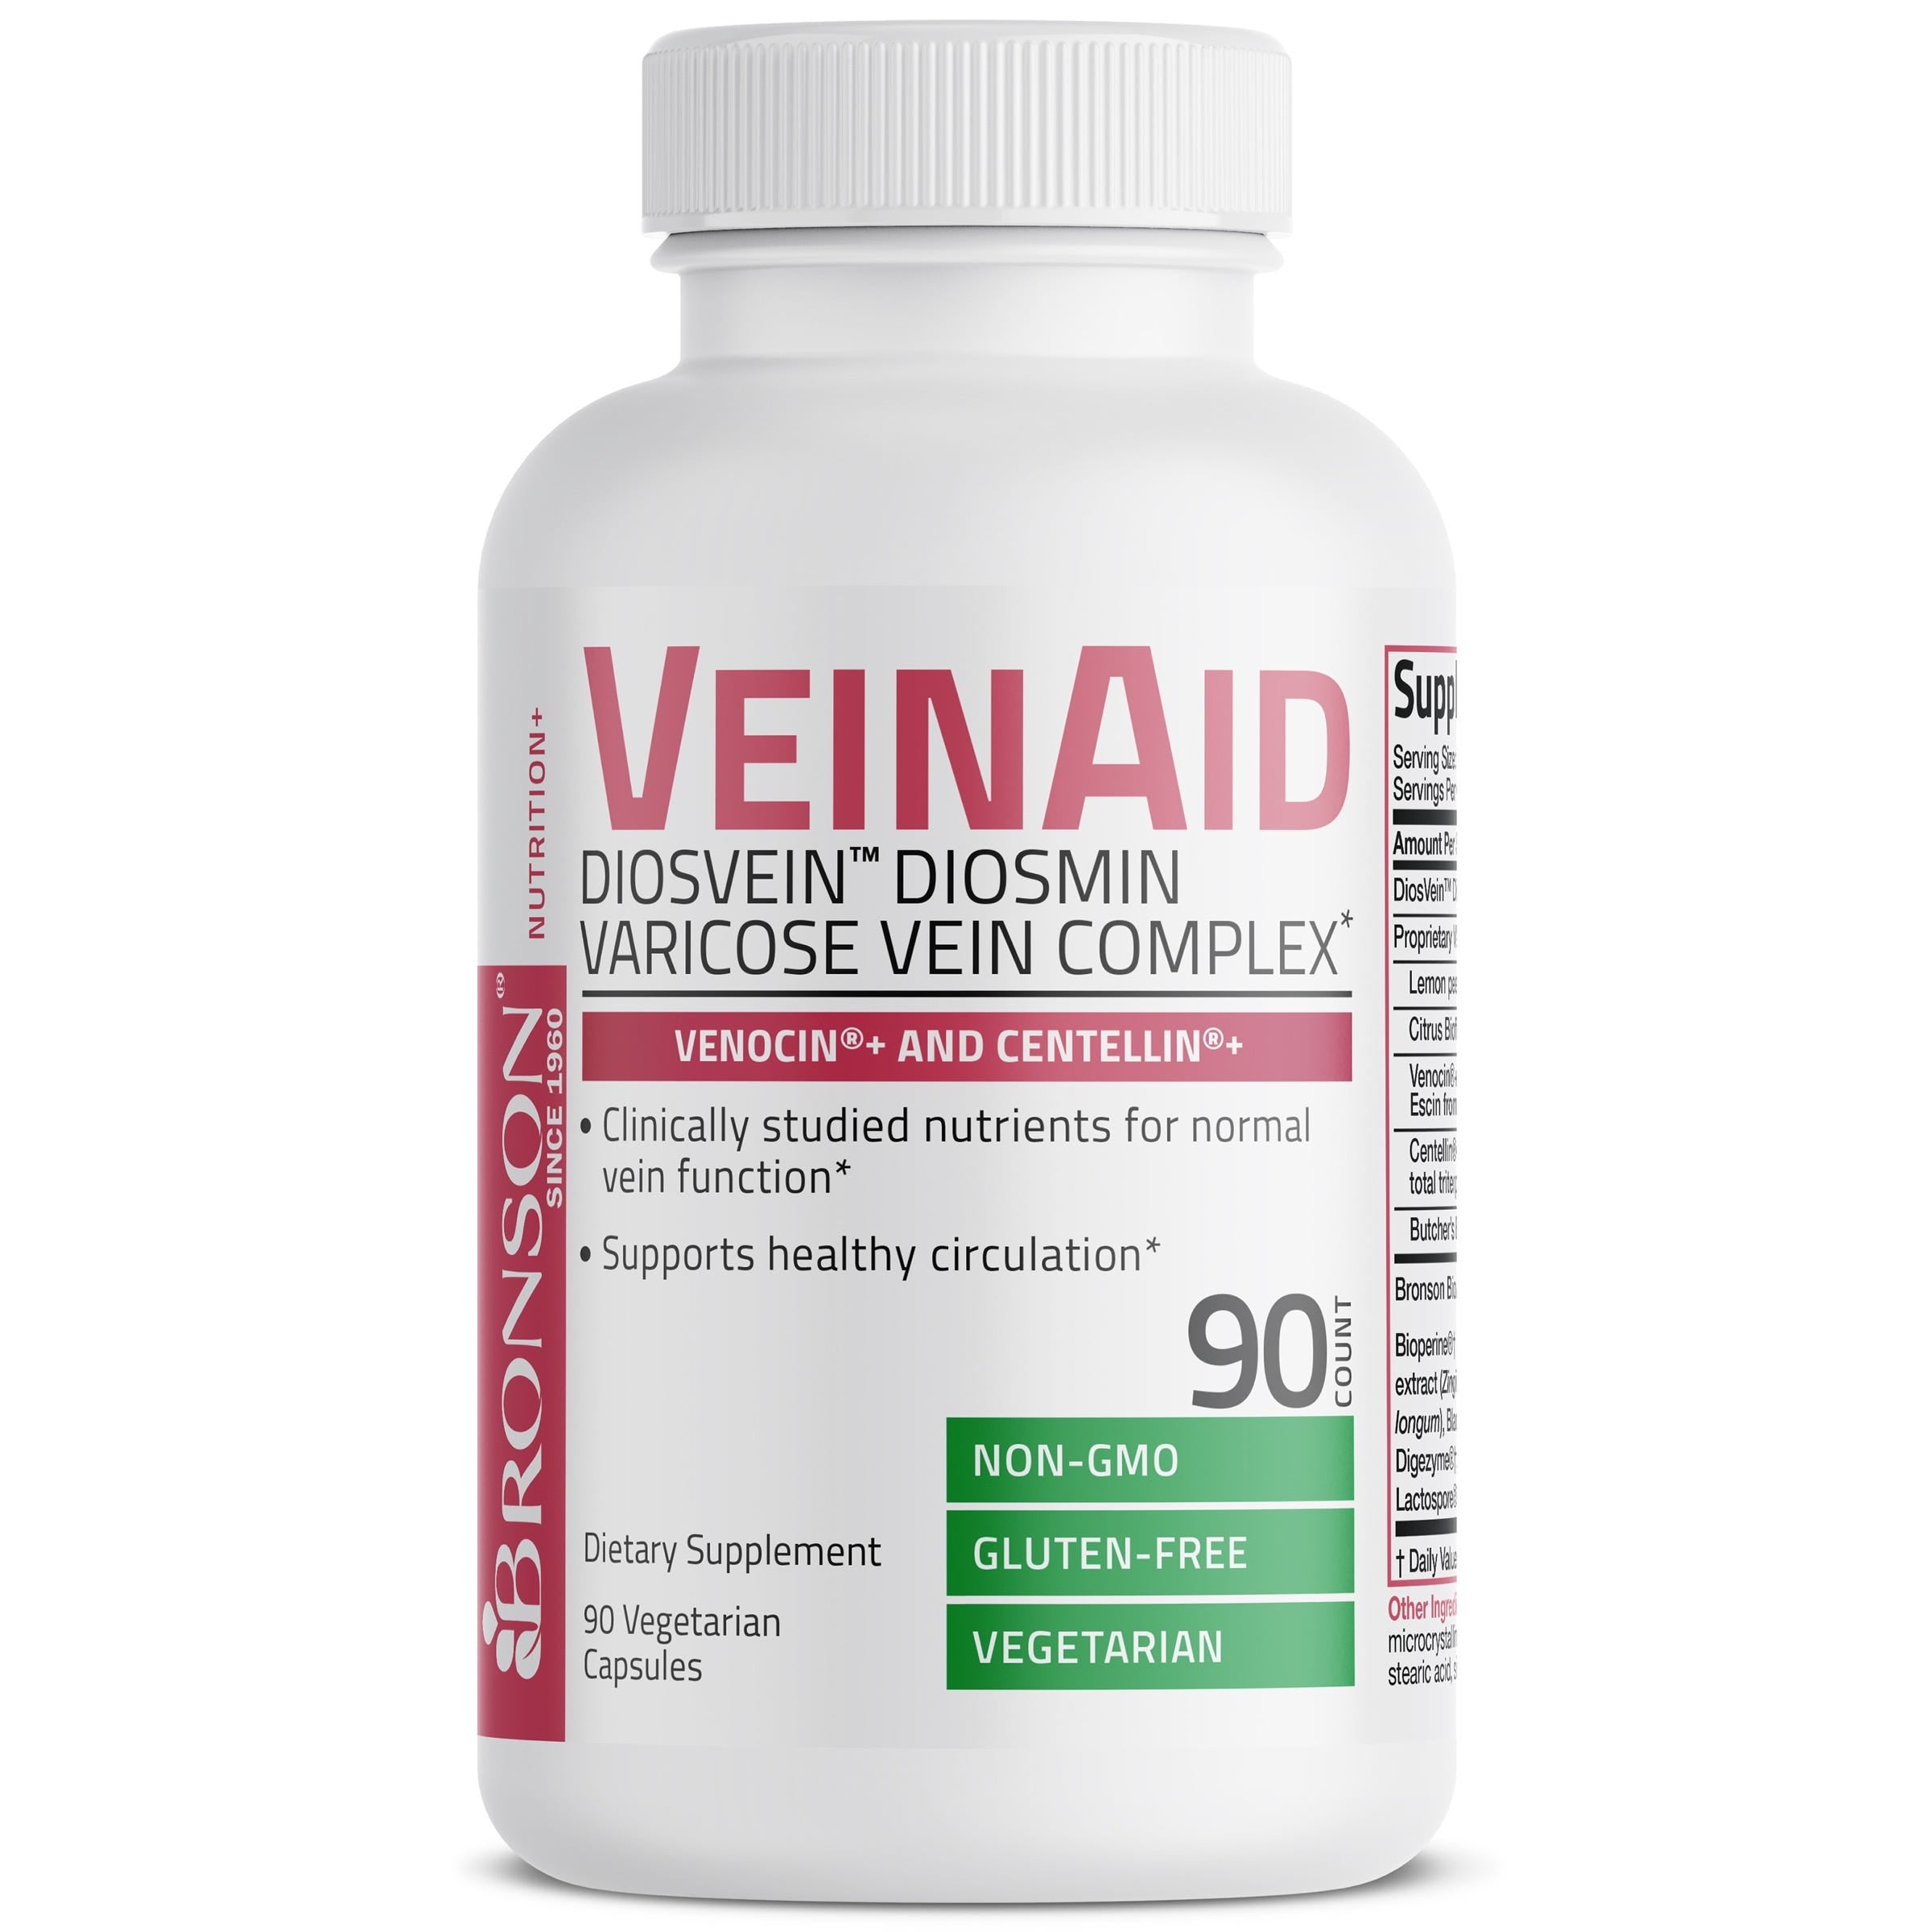 VeinAid DiosVein™ Diosmin Varicose Vein Complex - 90 Vegetarian Capsules view 3 of 6